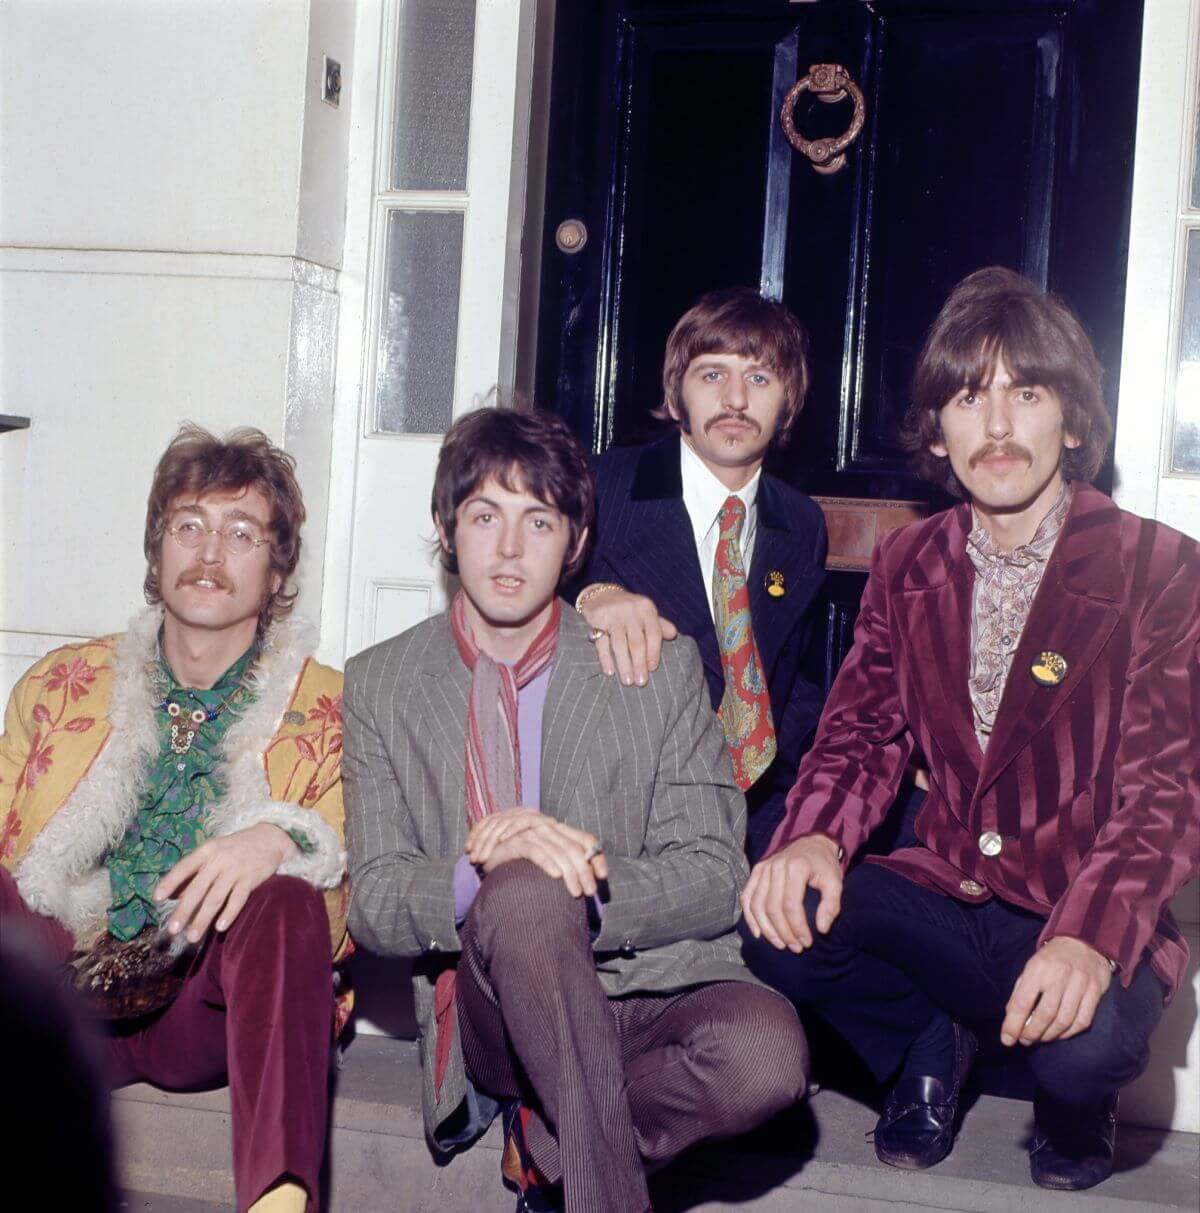 John Lennon, Paul McCartney, Ringo Starr, and George Harrison of The Beatles sit on a doorstep.